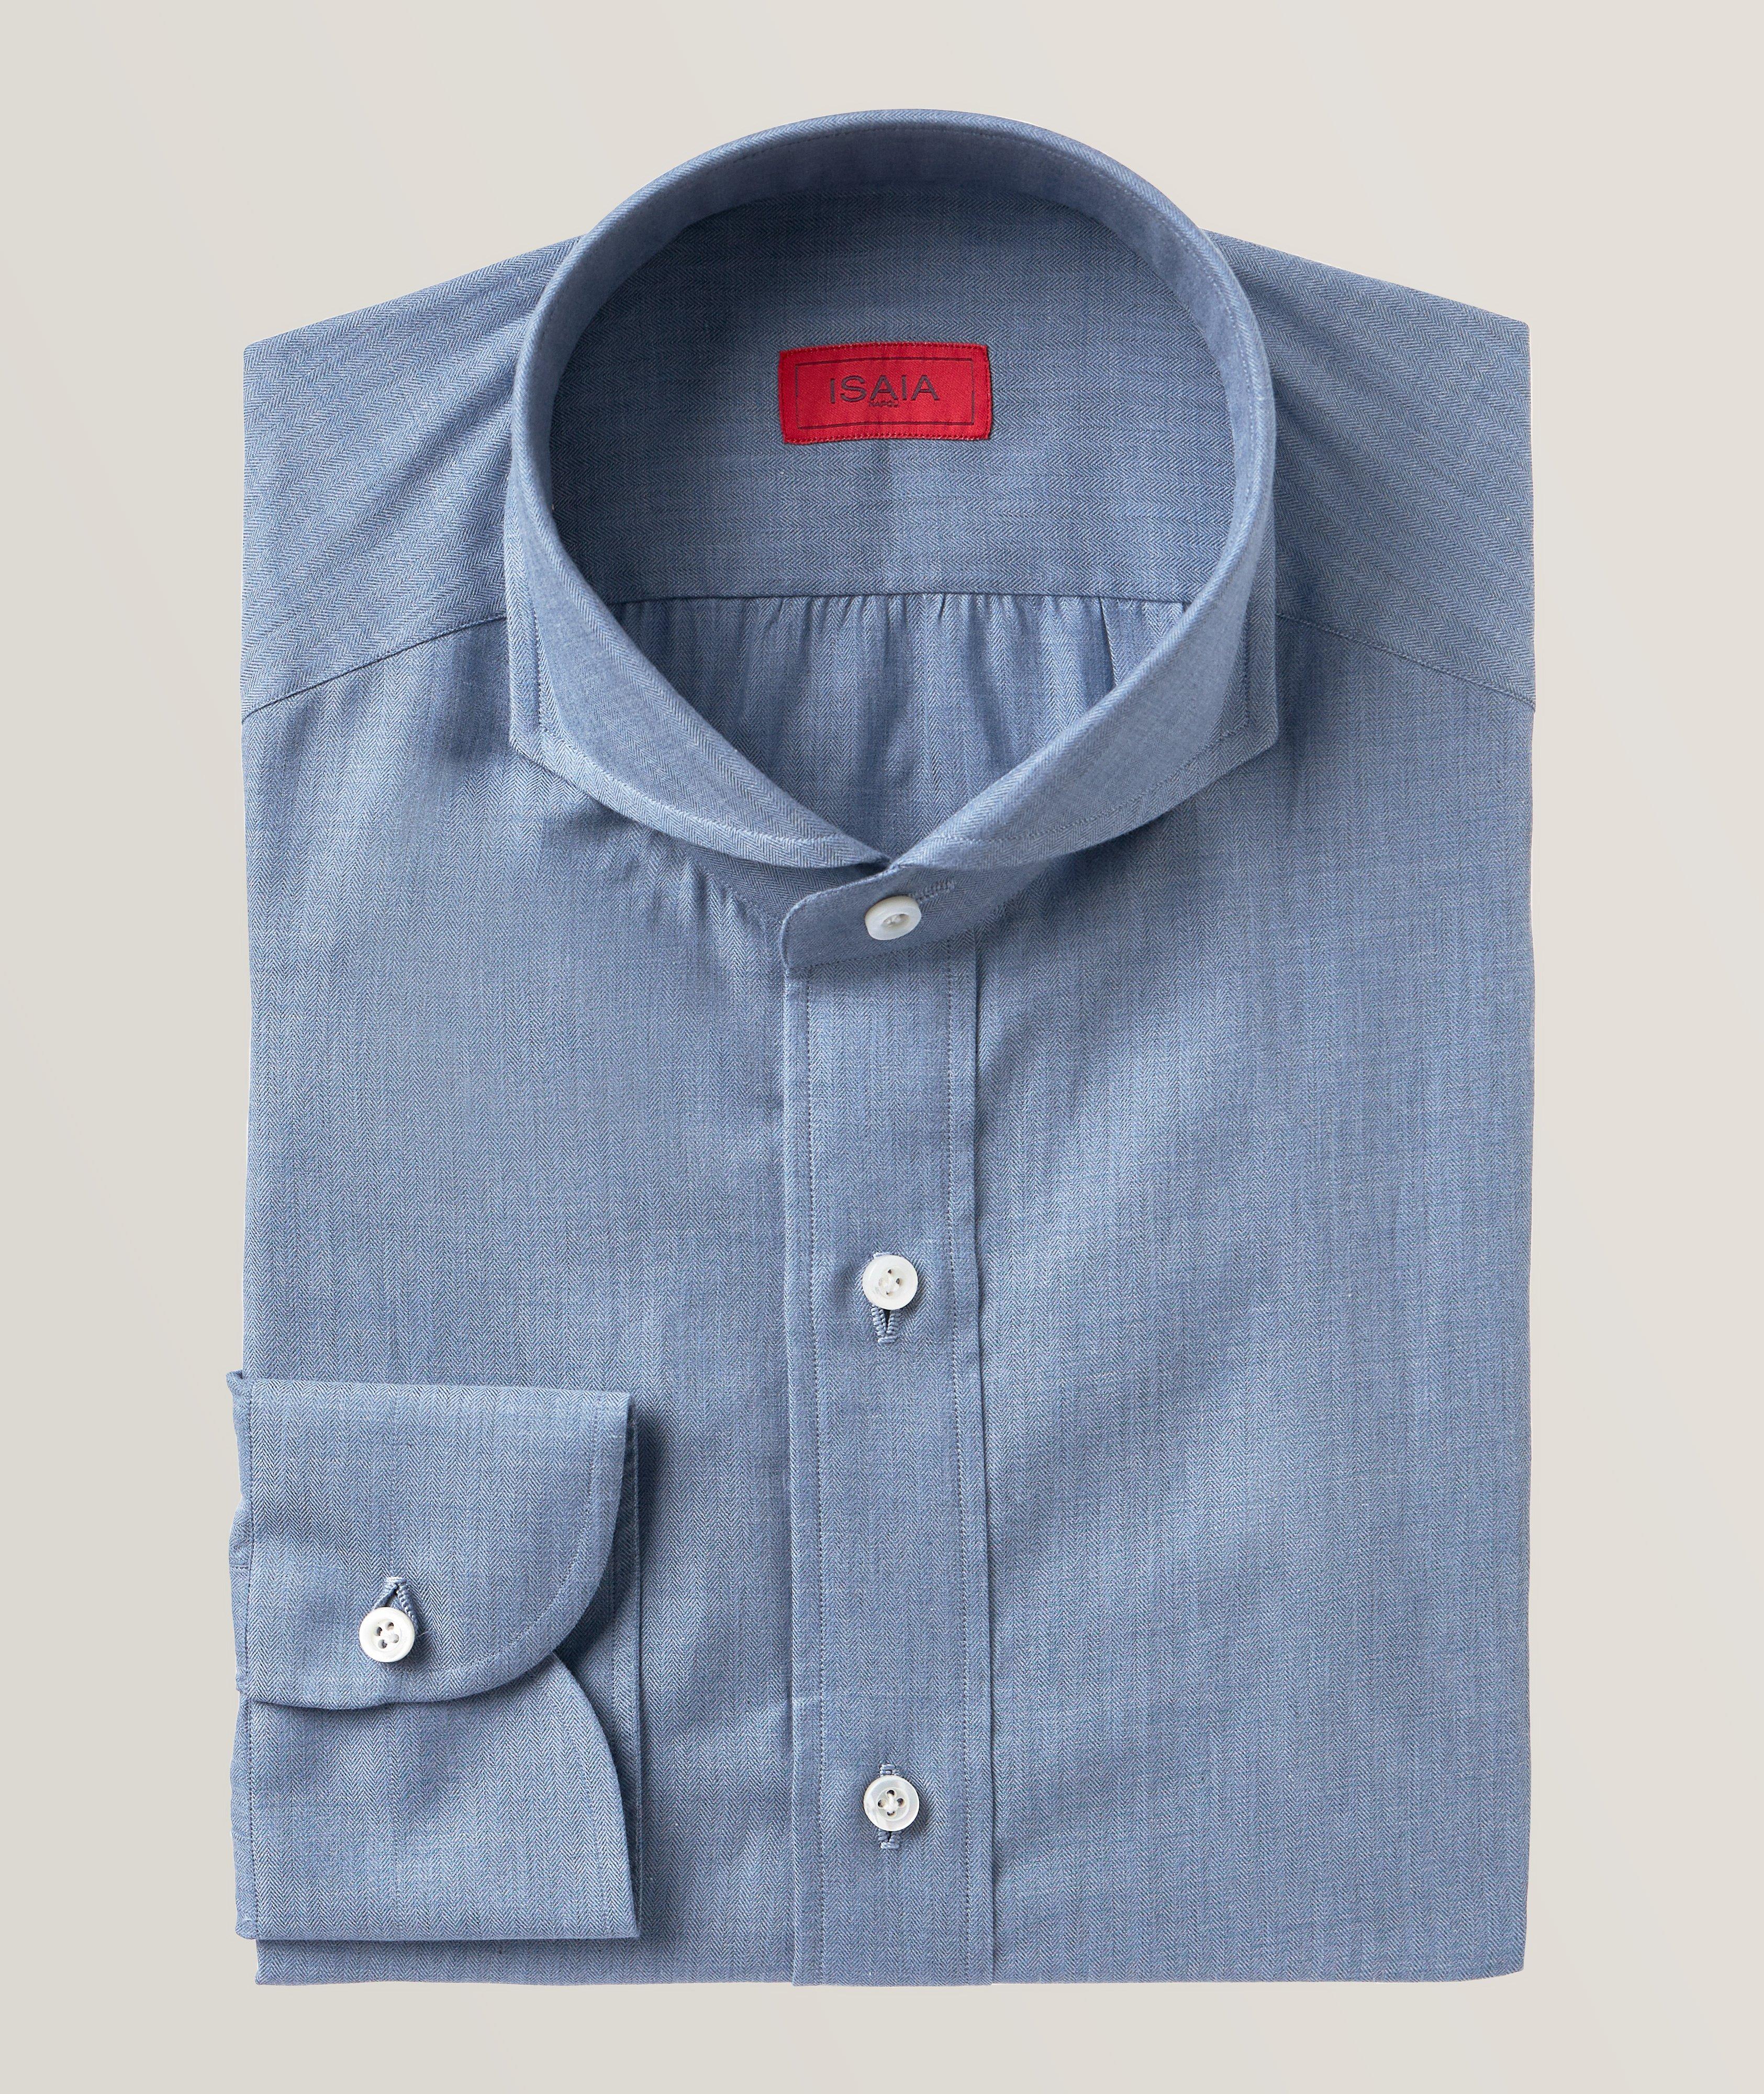 Herringbone-Stitched Dress Shirt image 0